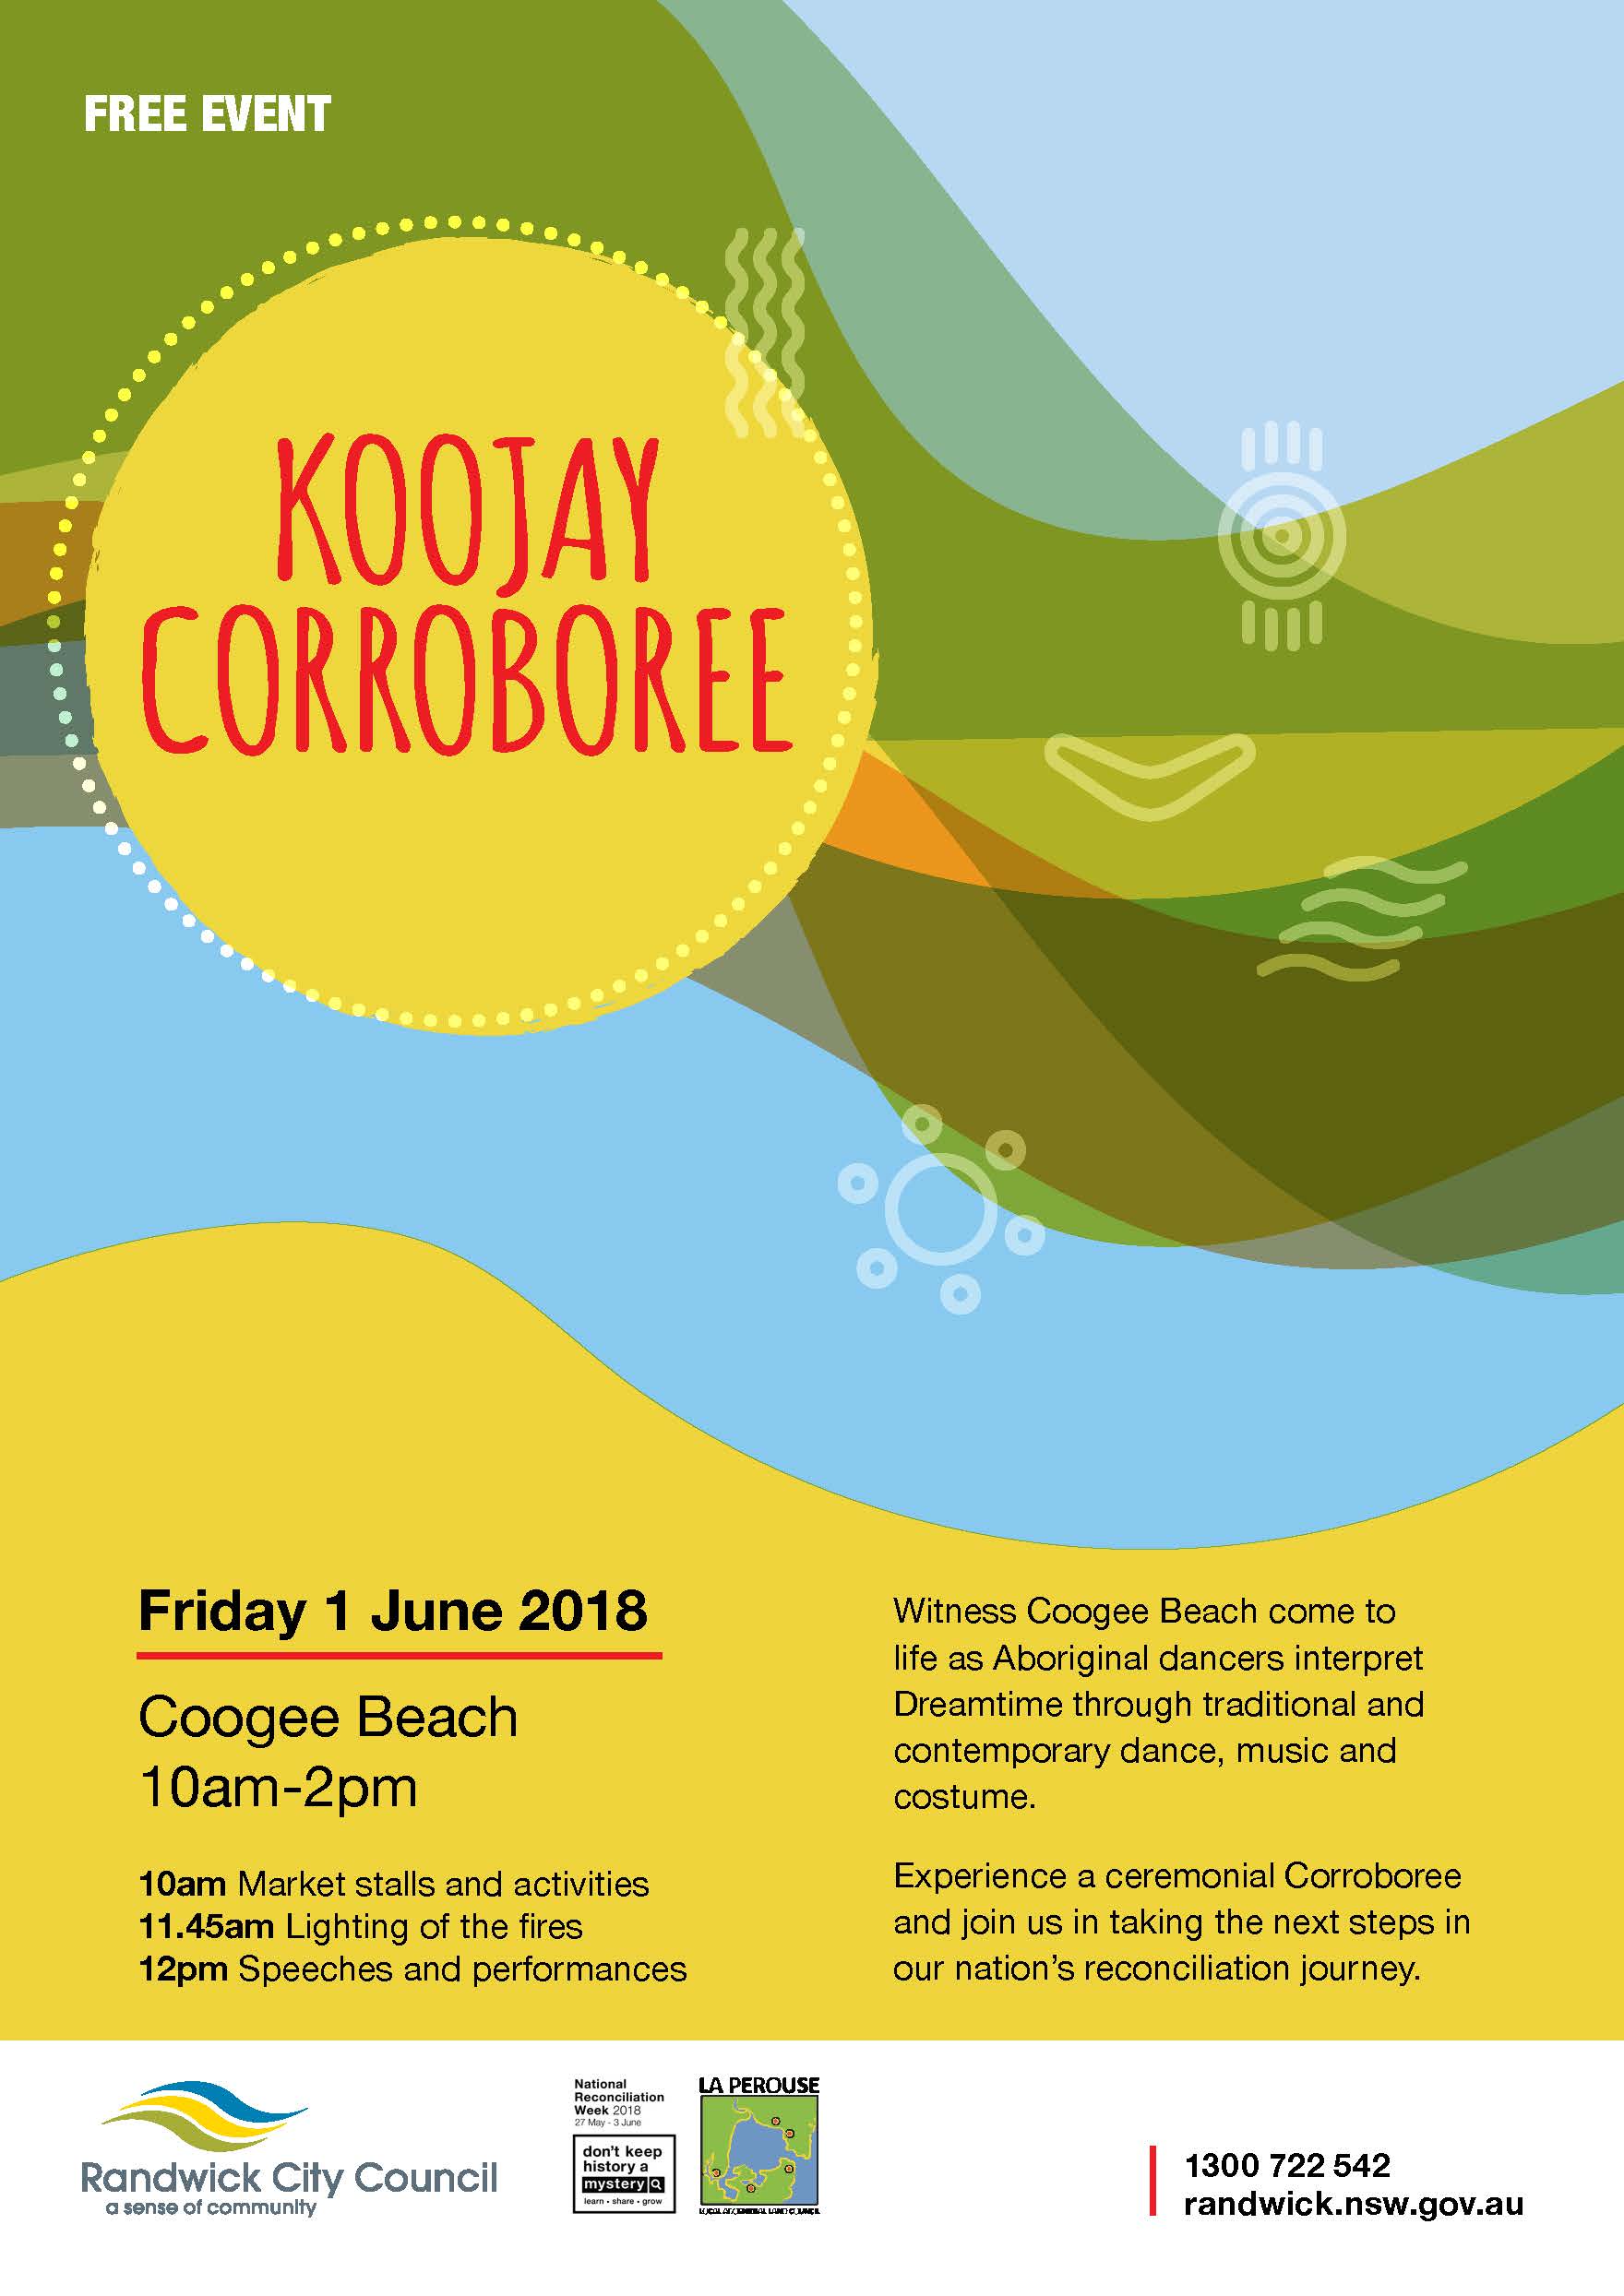 poster describing Corroboree event for National Reconciliation Week 2018